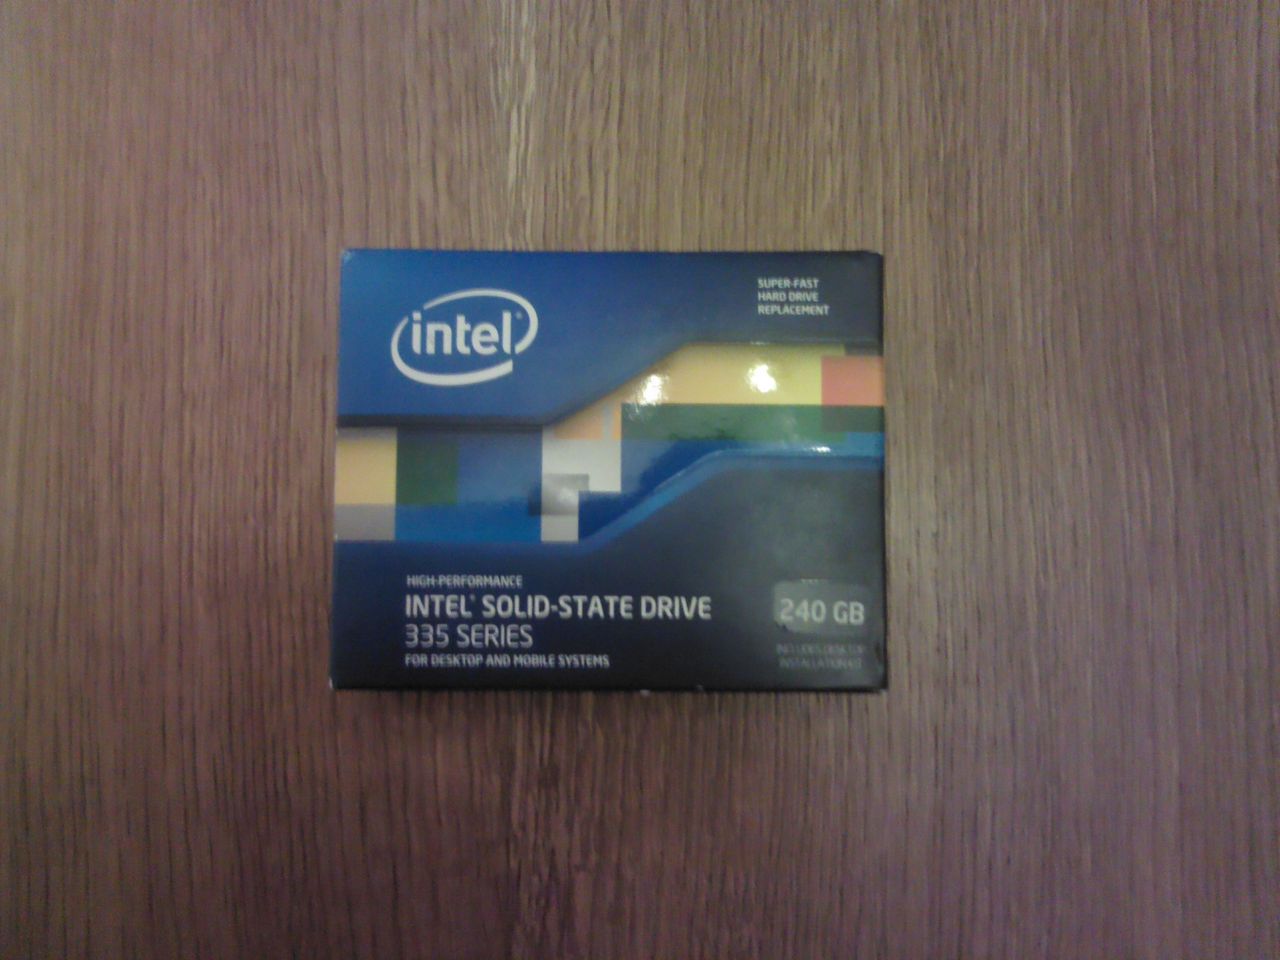 Intel SSD 335 240GB - unboxing